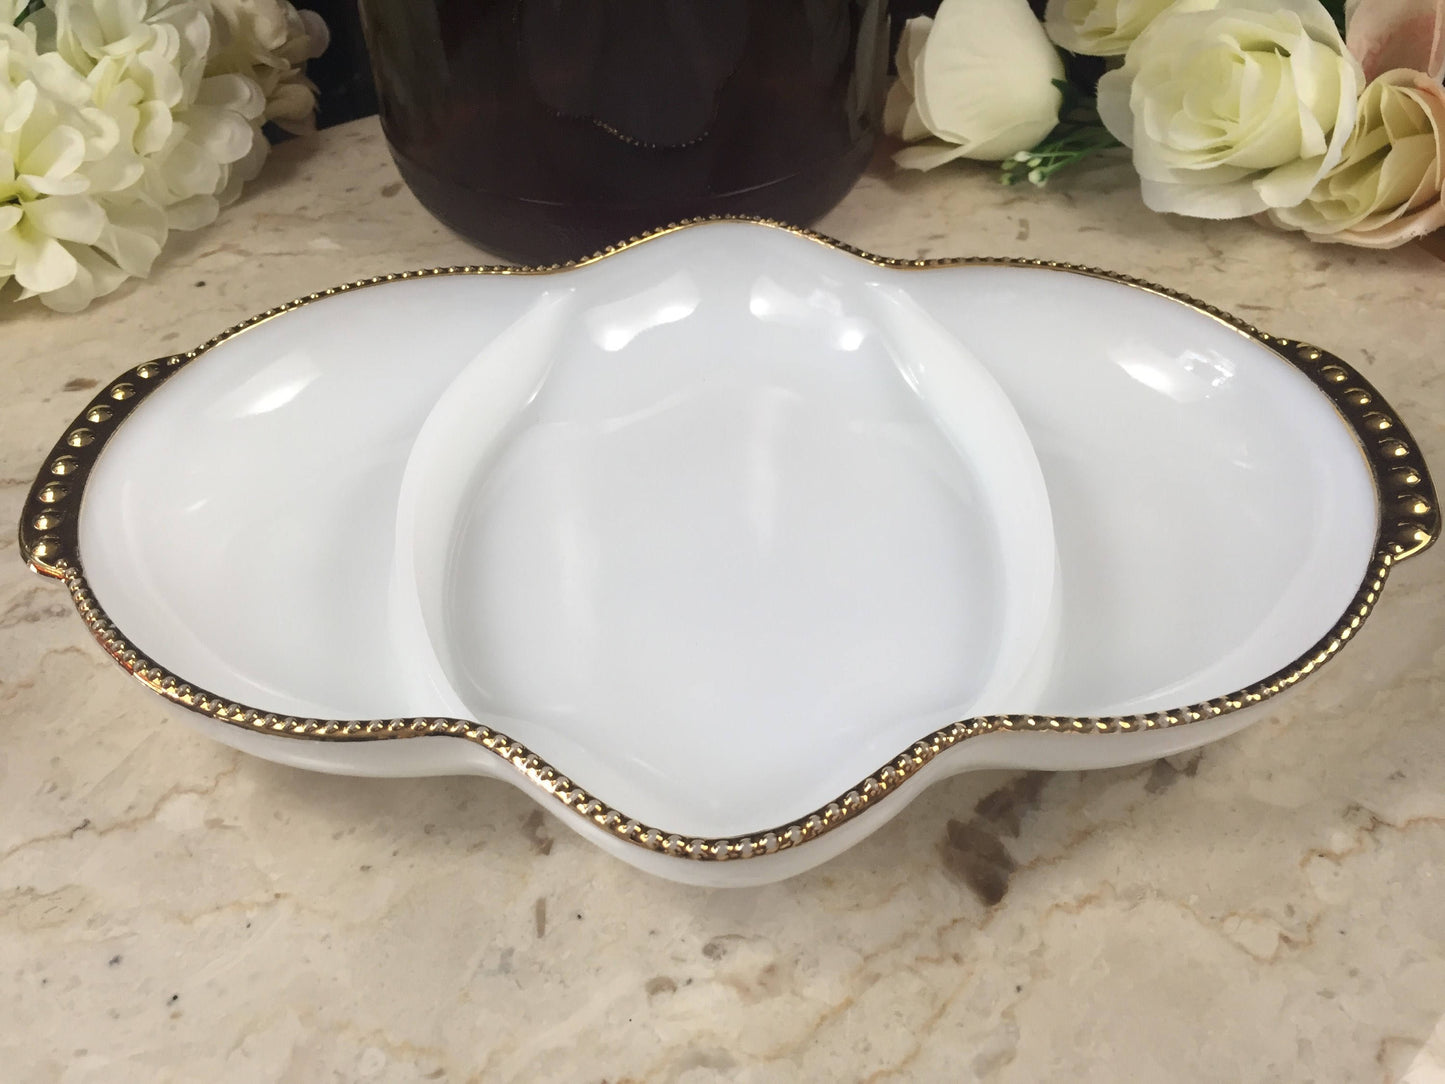 Fire King Milk Glass Divided Dish-Vintage Serving Dish-White Serving Dish-White and Gold Decor-Vintage Wedding Decor